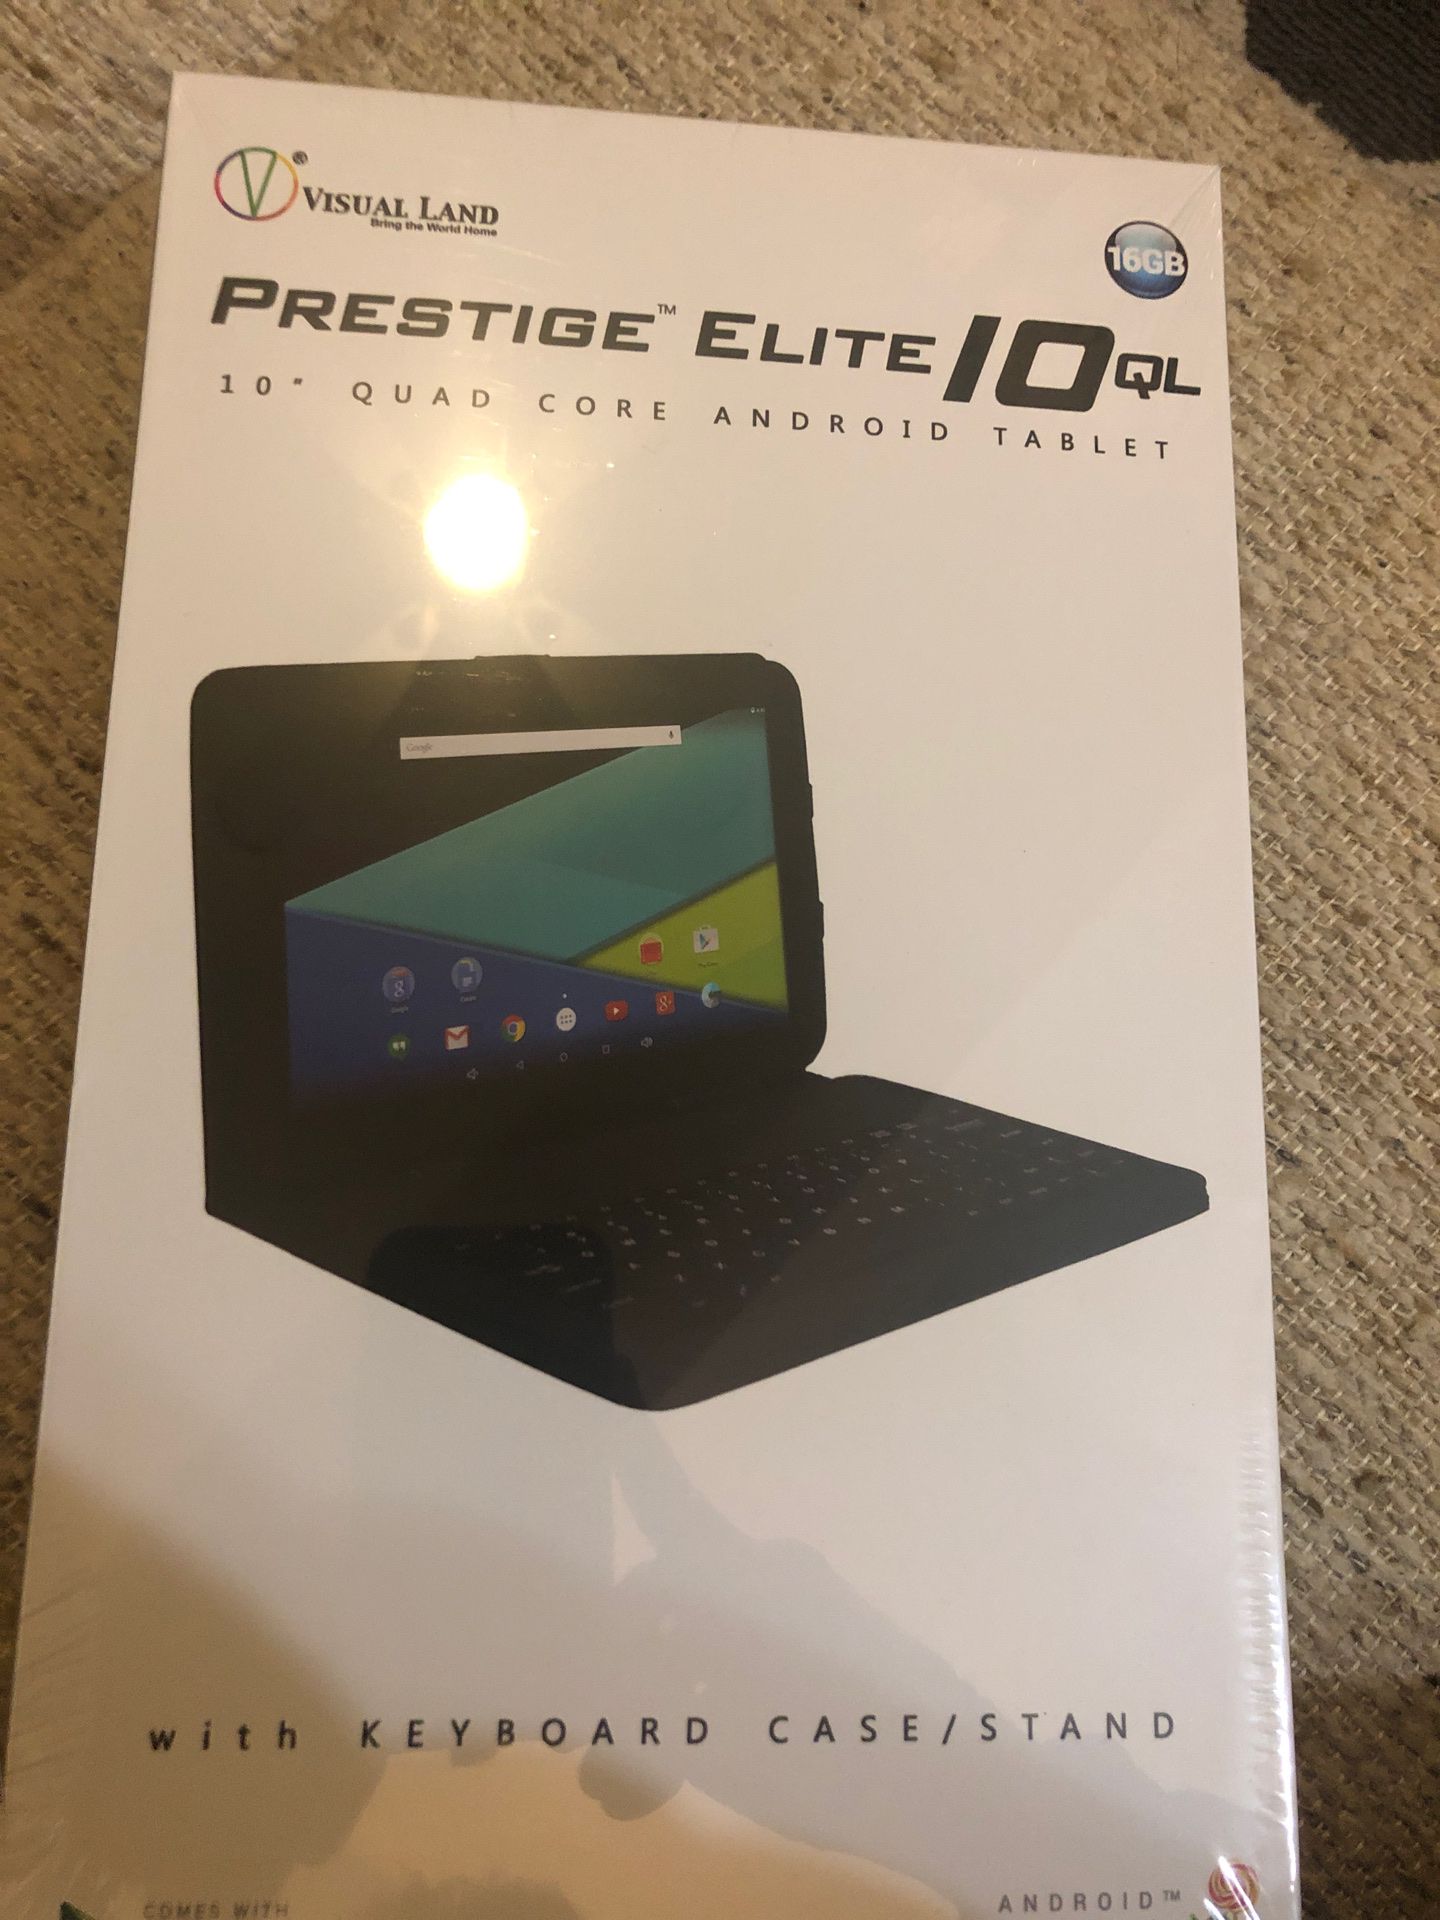 Prestige elite 10 ql quad core android tablet